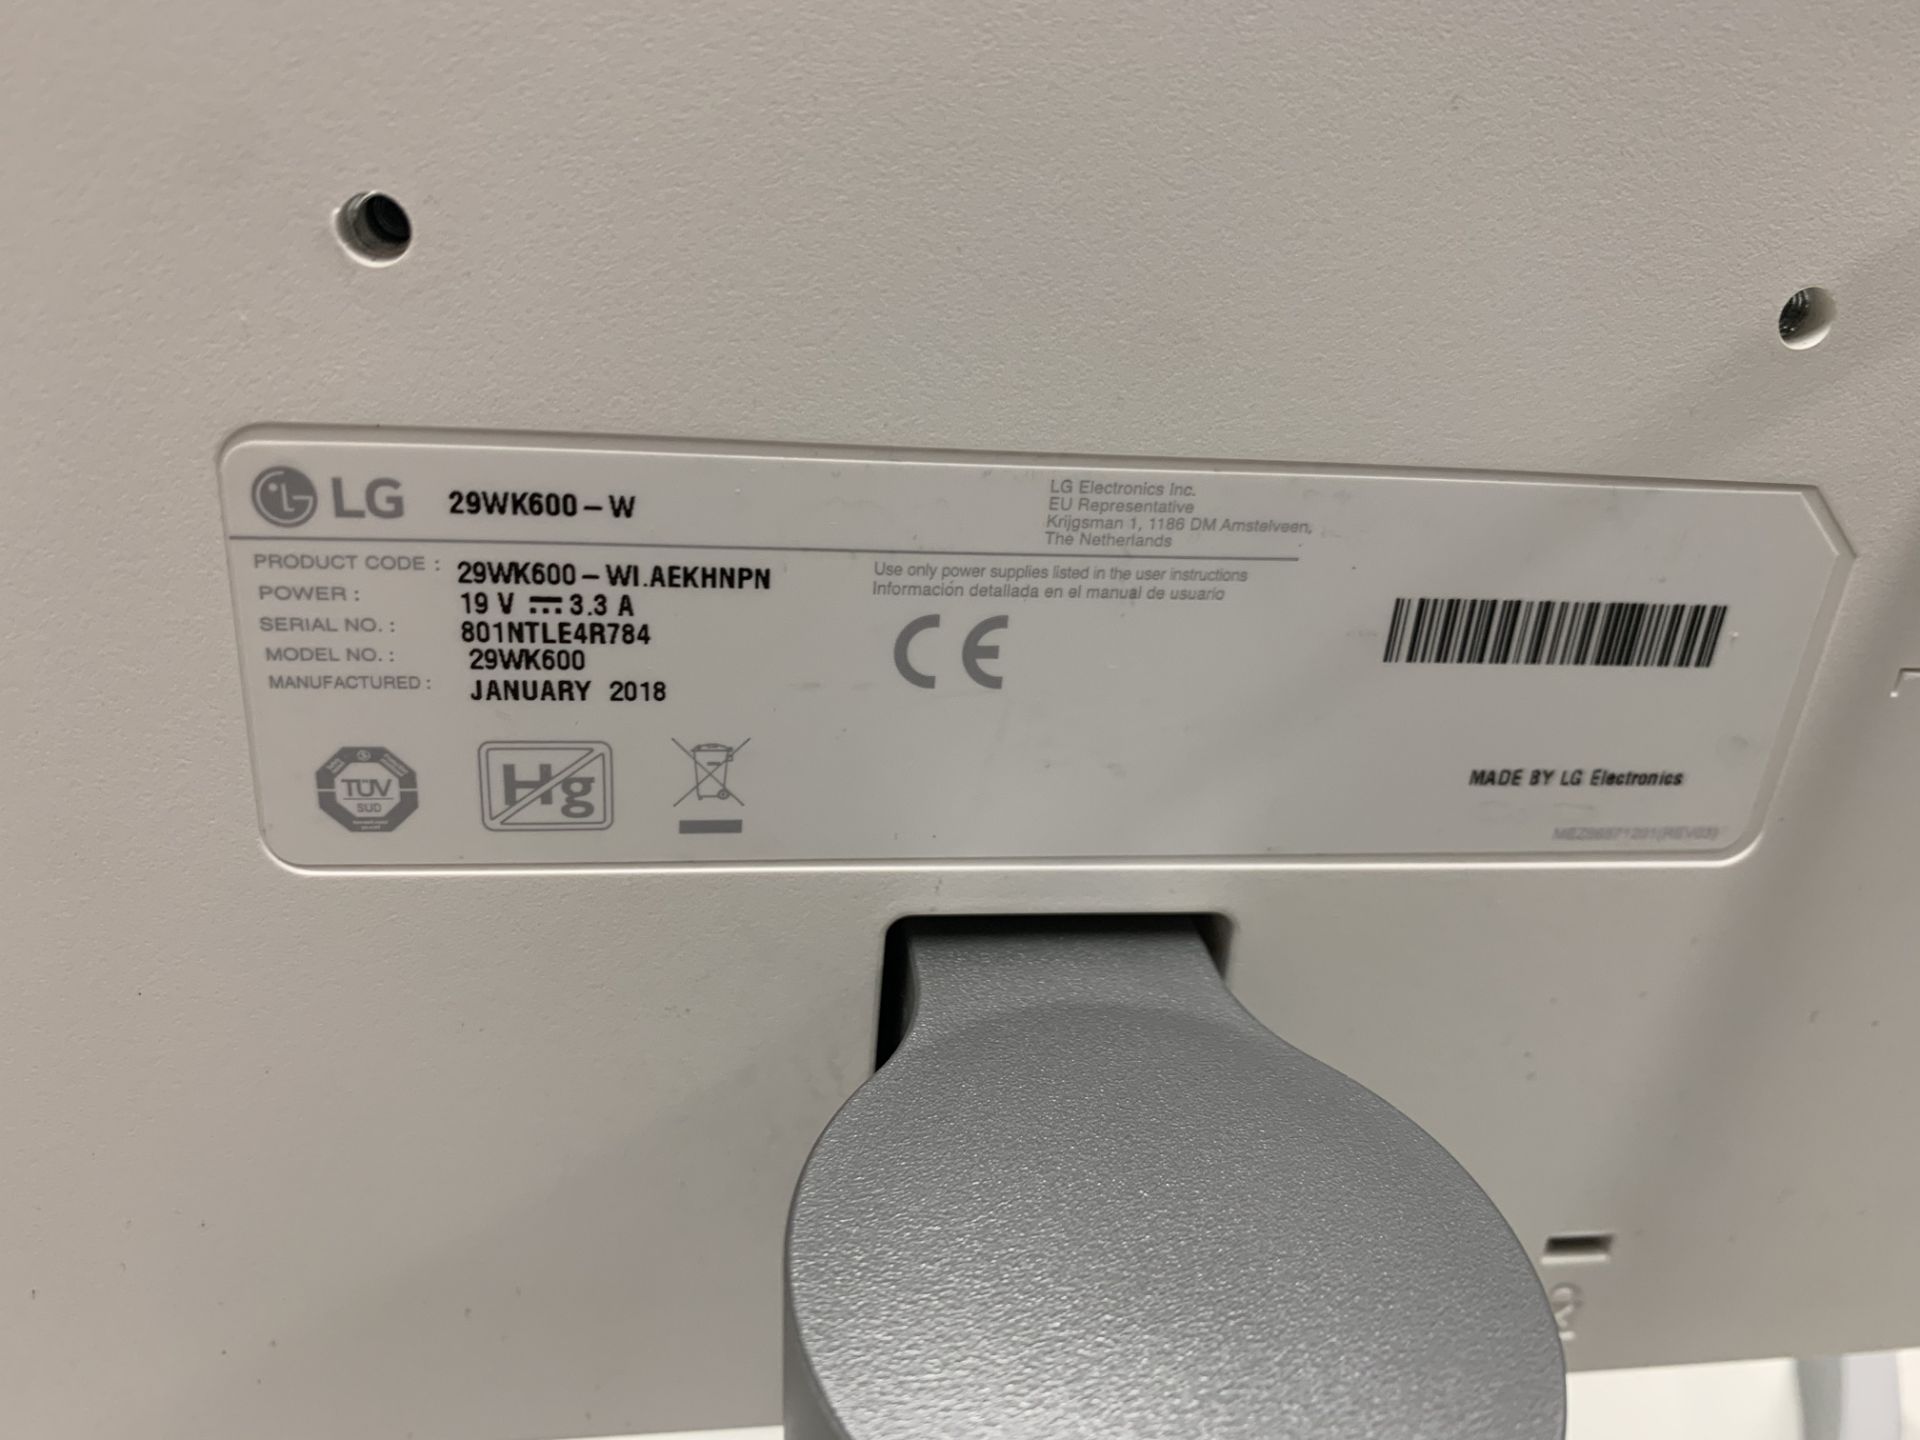 LG model 29WK600-W 29" LED back lit LCD monitor white & silver Jan 2018 - Image 3 of 3